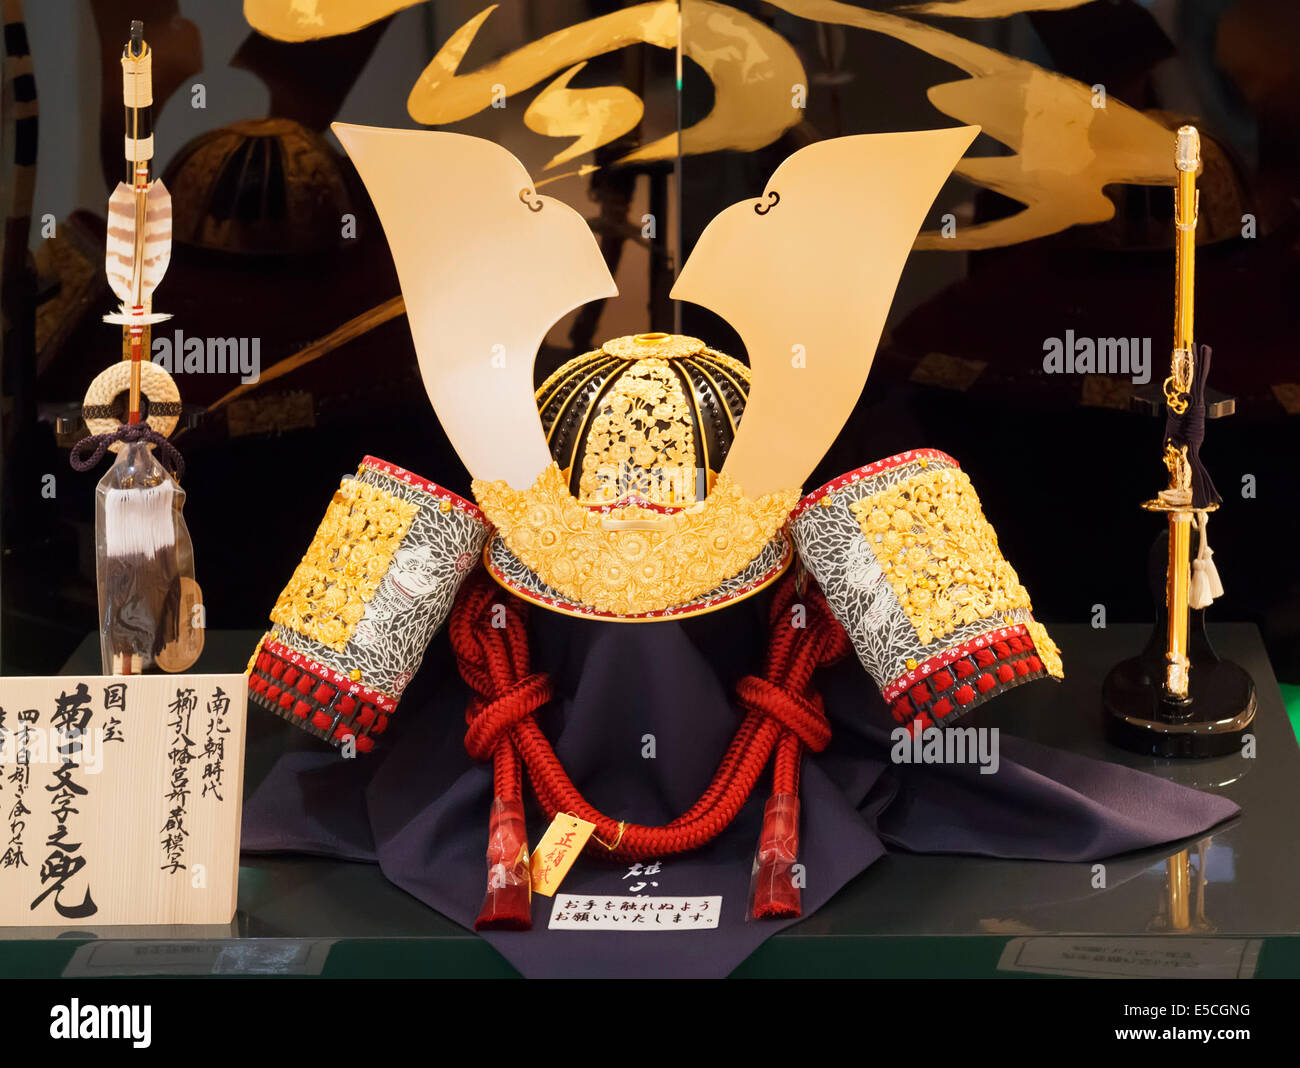 Samurai armour, Kabuto helmet souvenir on display in a store. Tokyo, Japan. Stock Photo